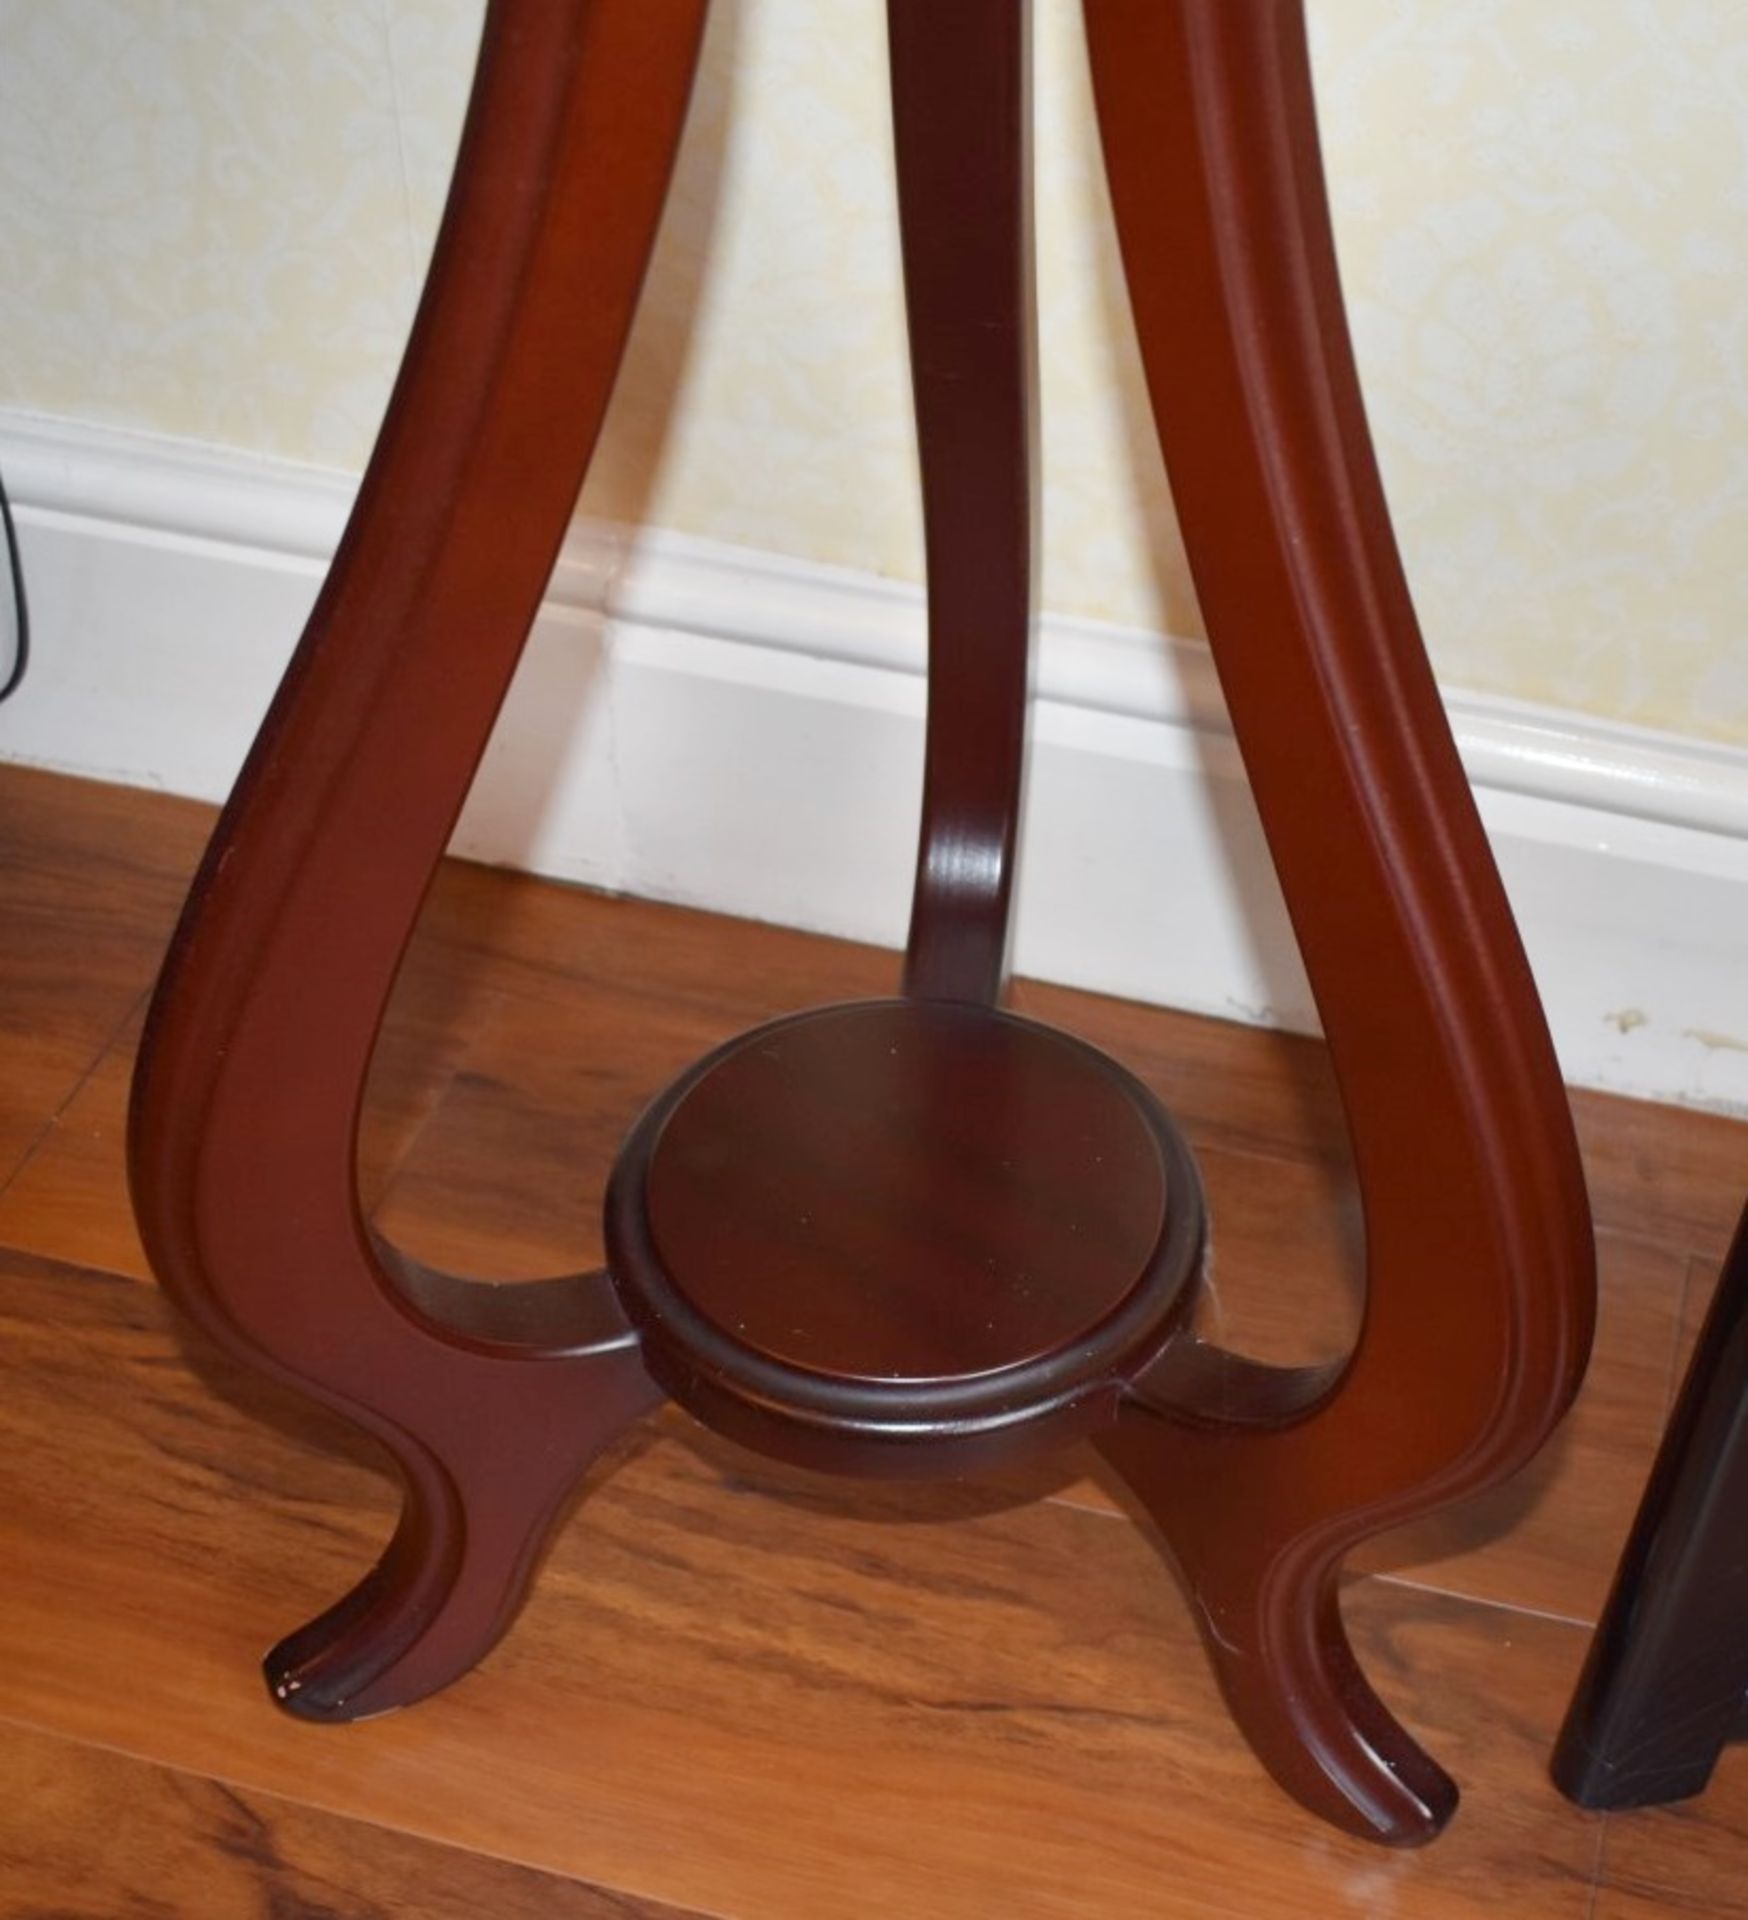 1 x Mahogany Lamp / Vase Table With Elegant Triple Leg Base and Undershelf - Dimensions H75 x W37 - Image 5 of 5